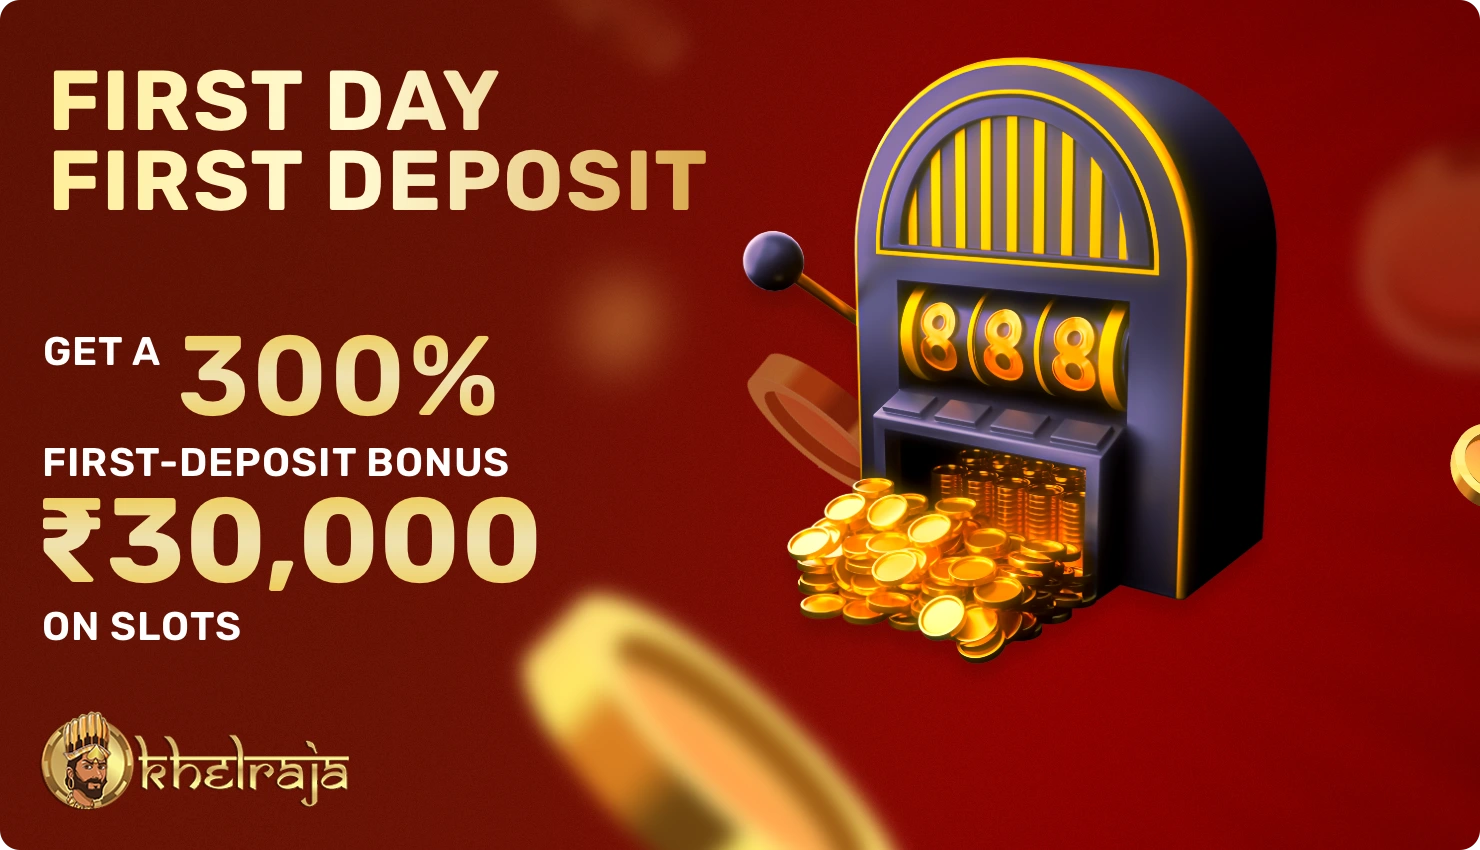 First deposit bonus for slot machines at Khelraja casino